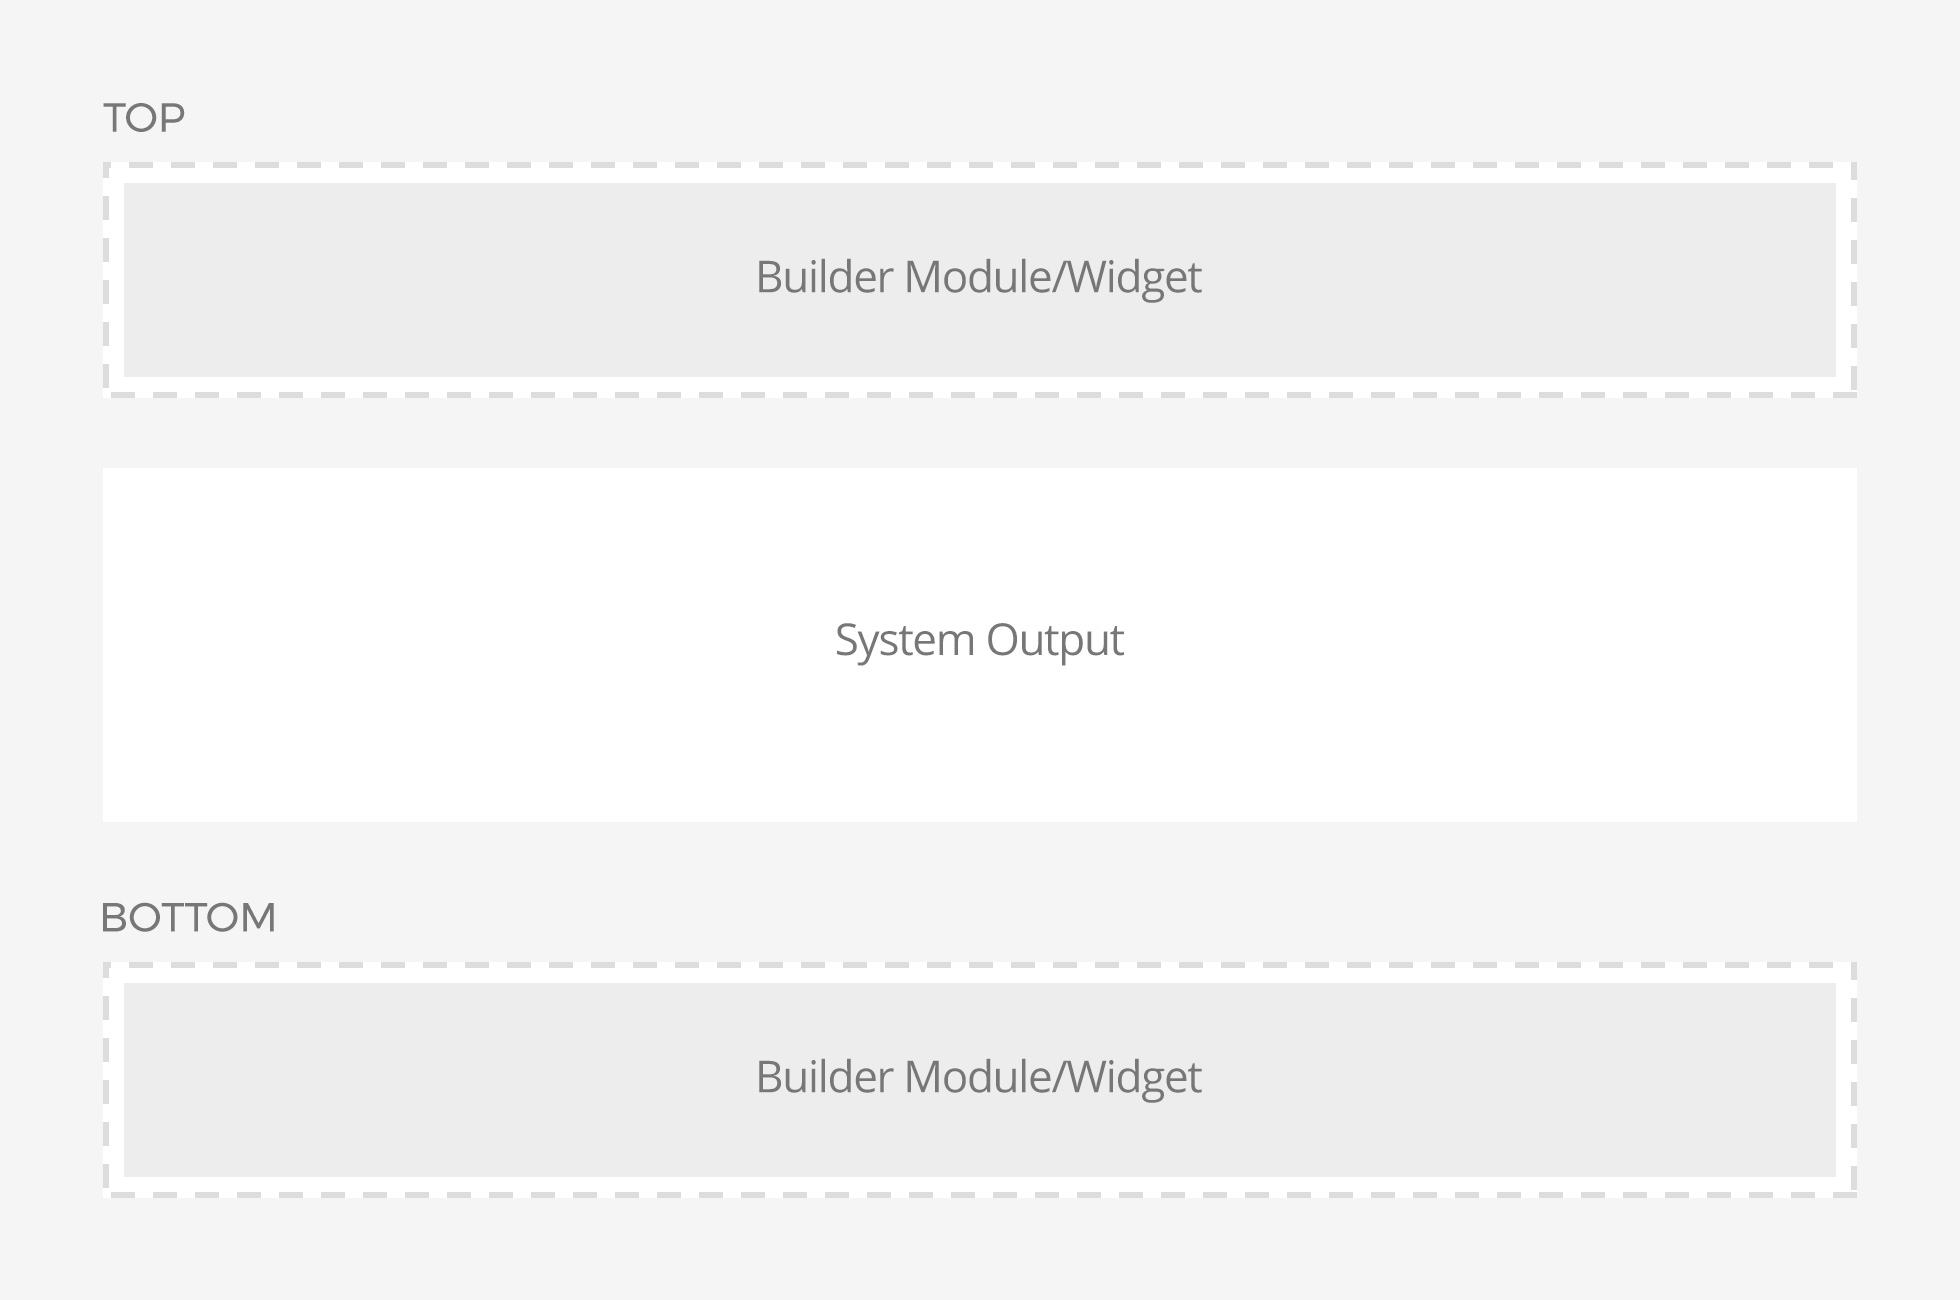 The Builder Module and Widget 